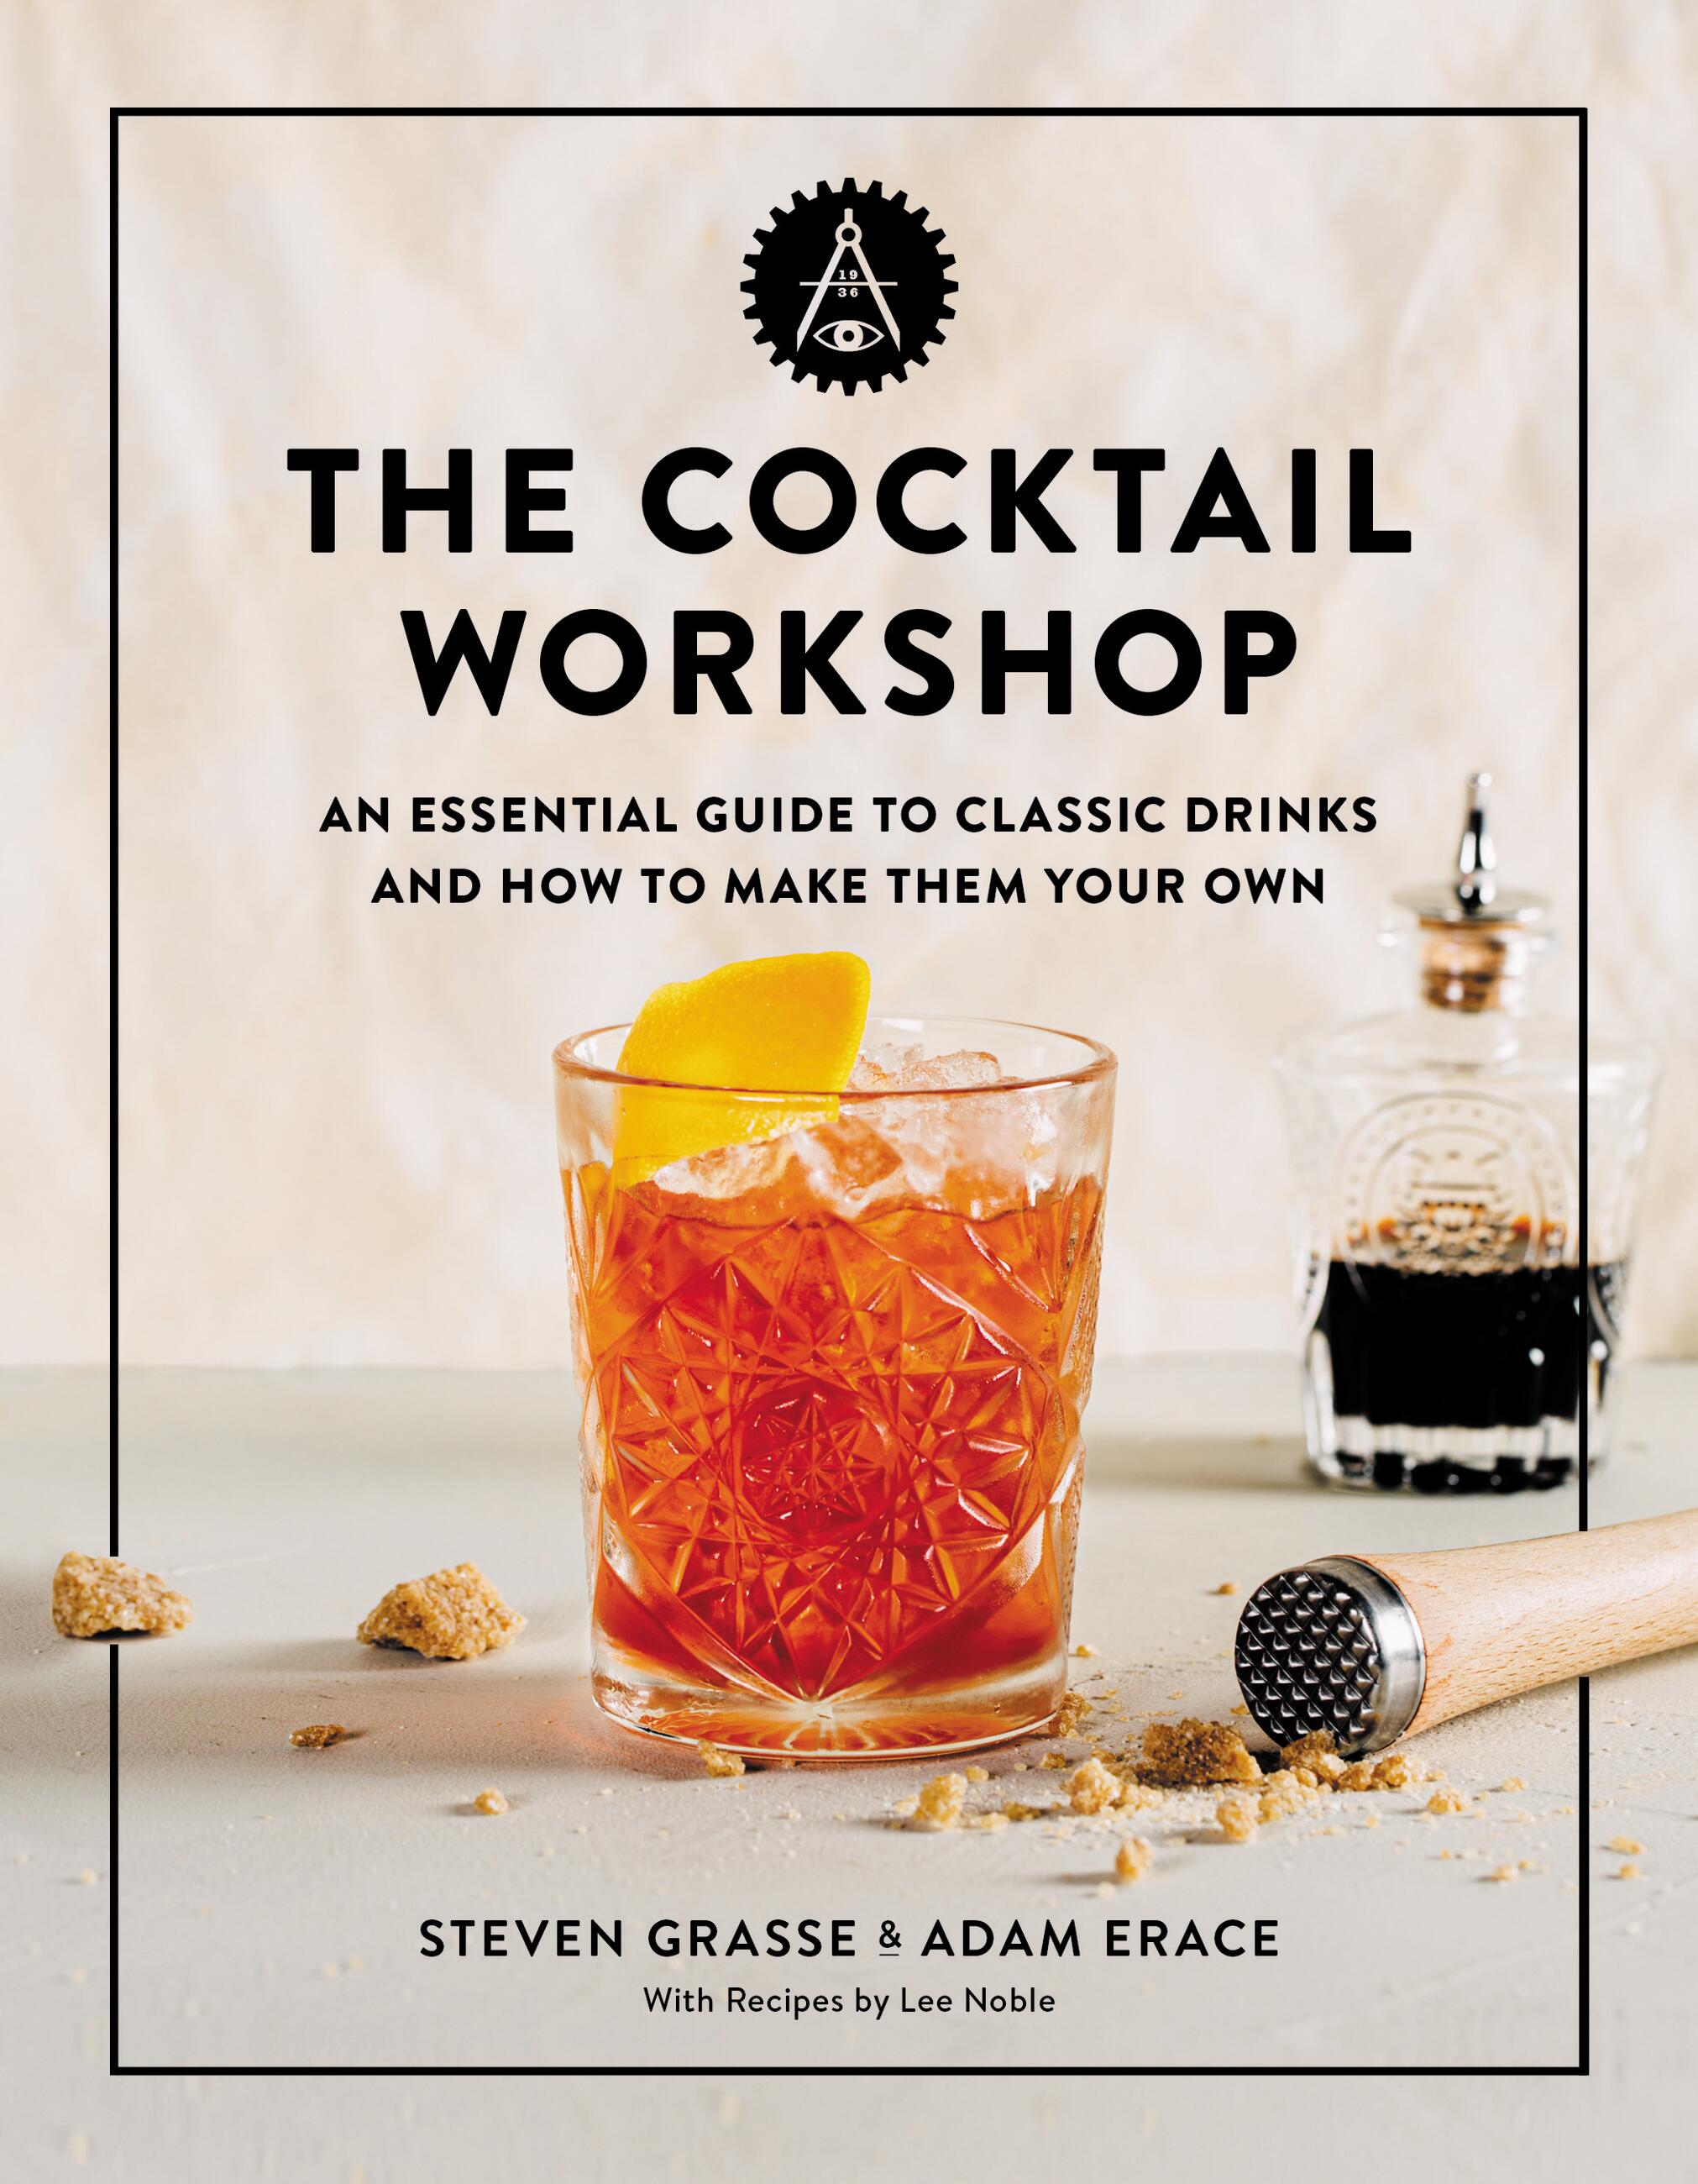 The Cocktail Workshop by Steven Grasse